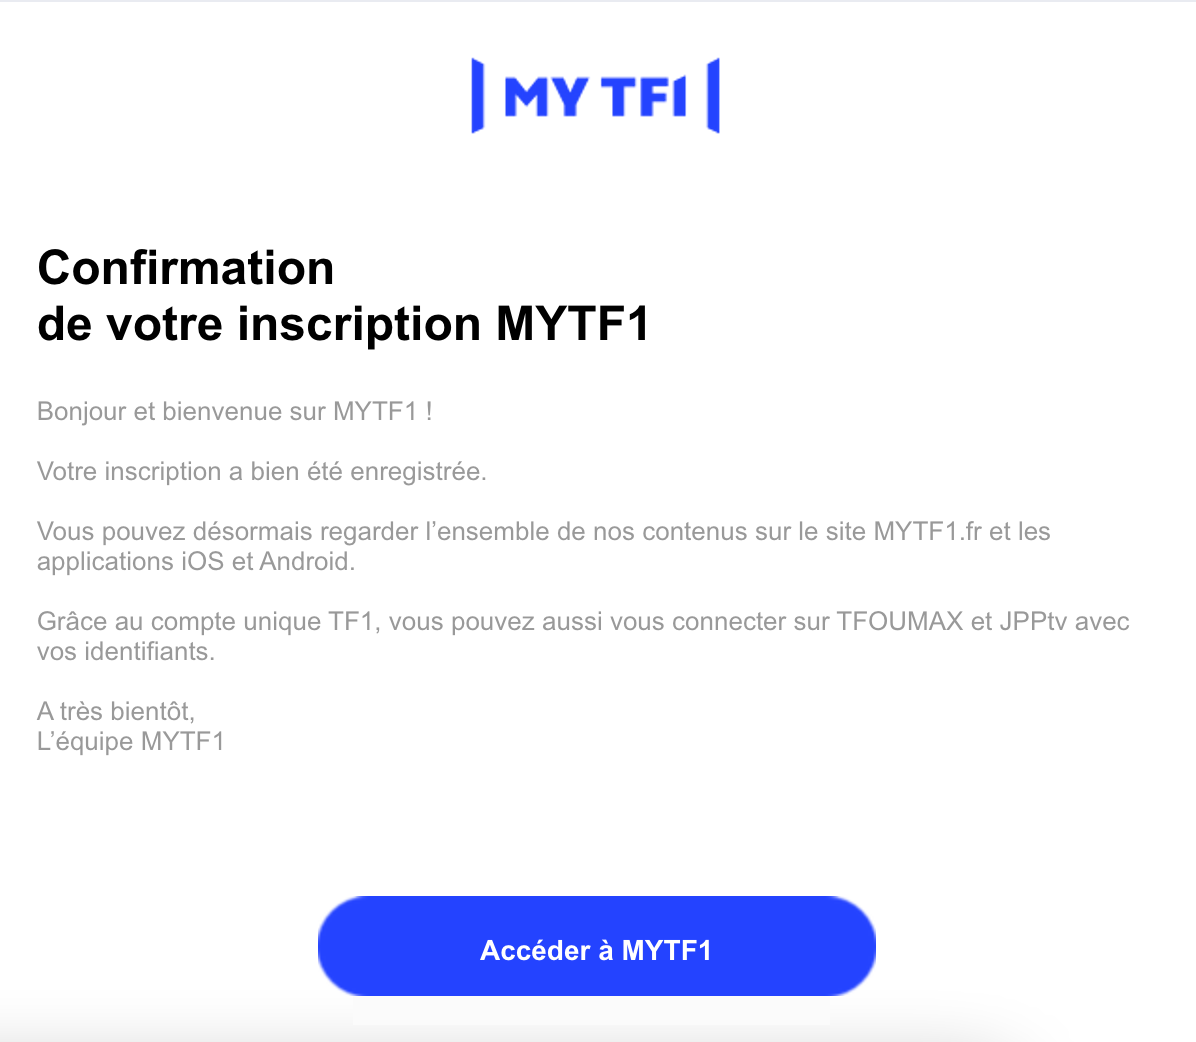 MYTF1 confirmation email